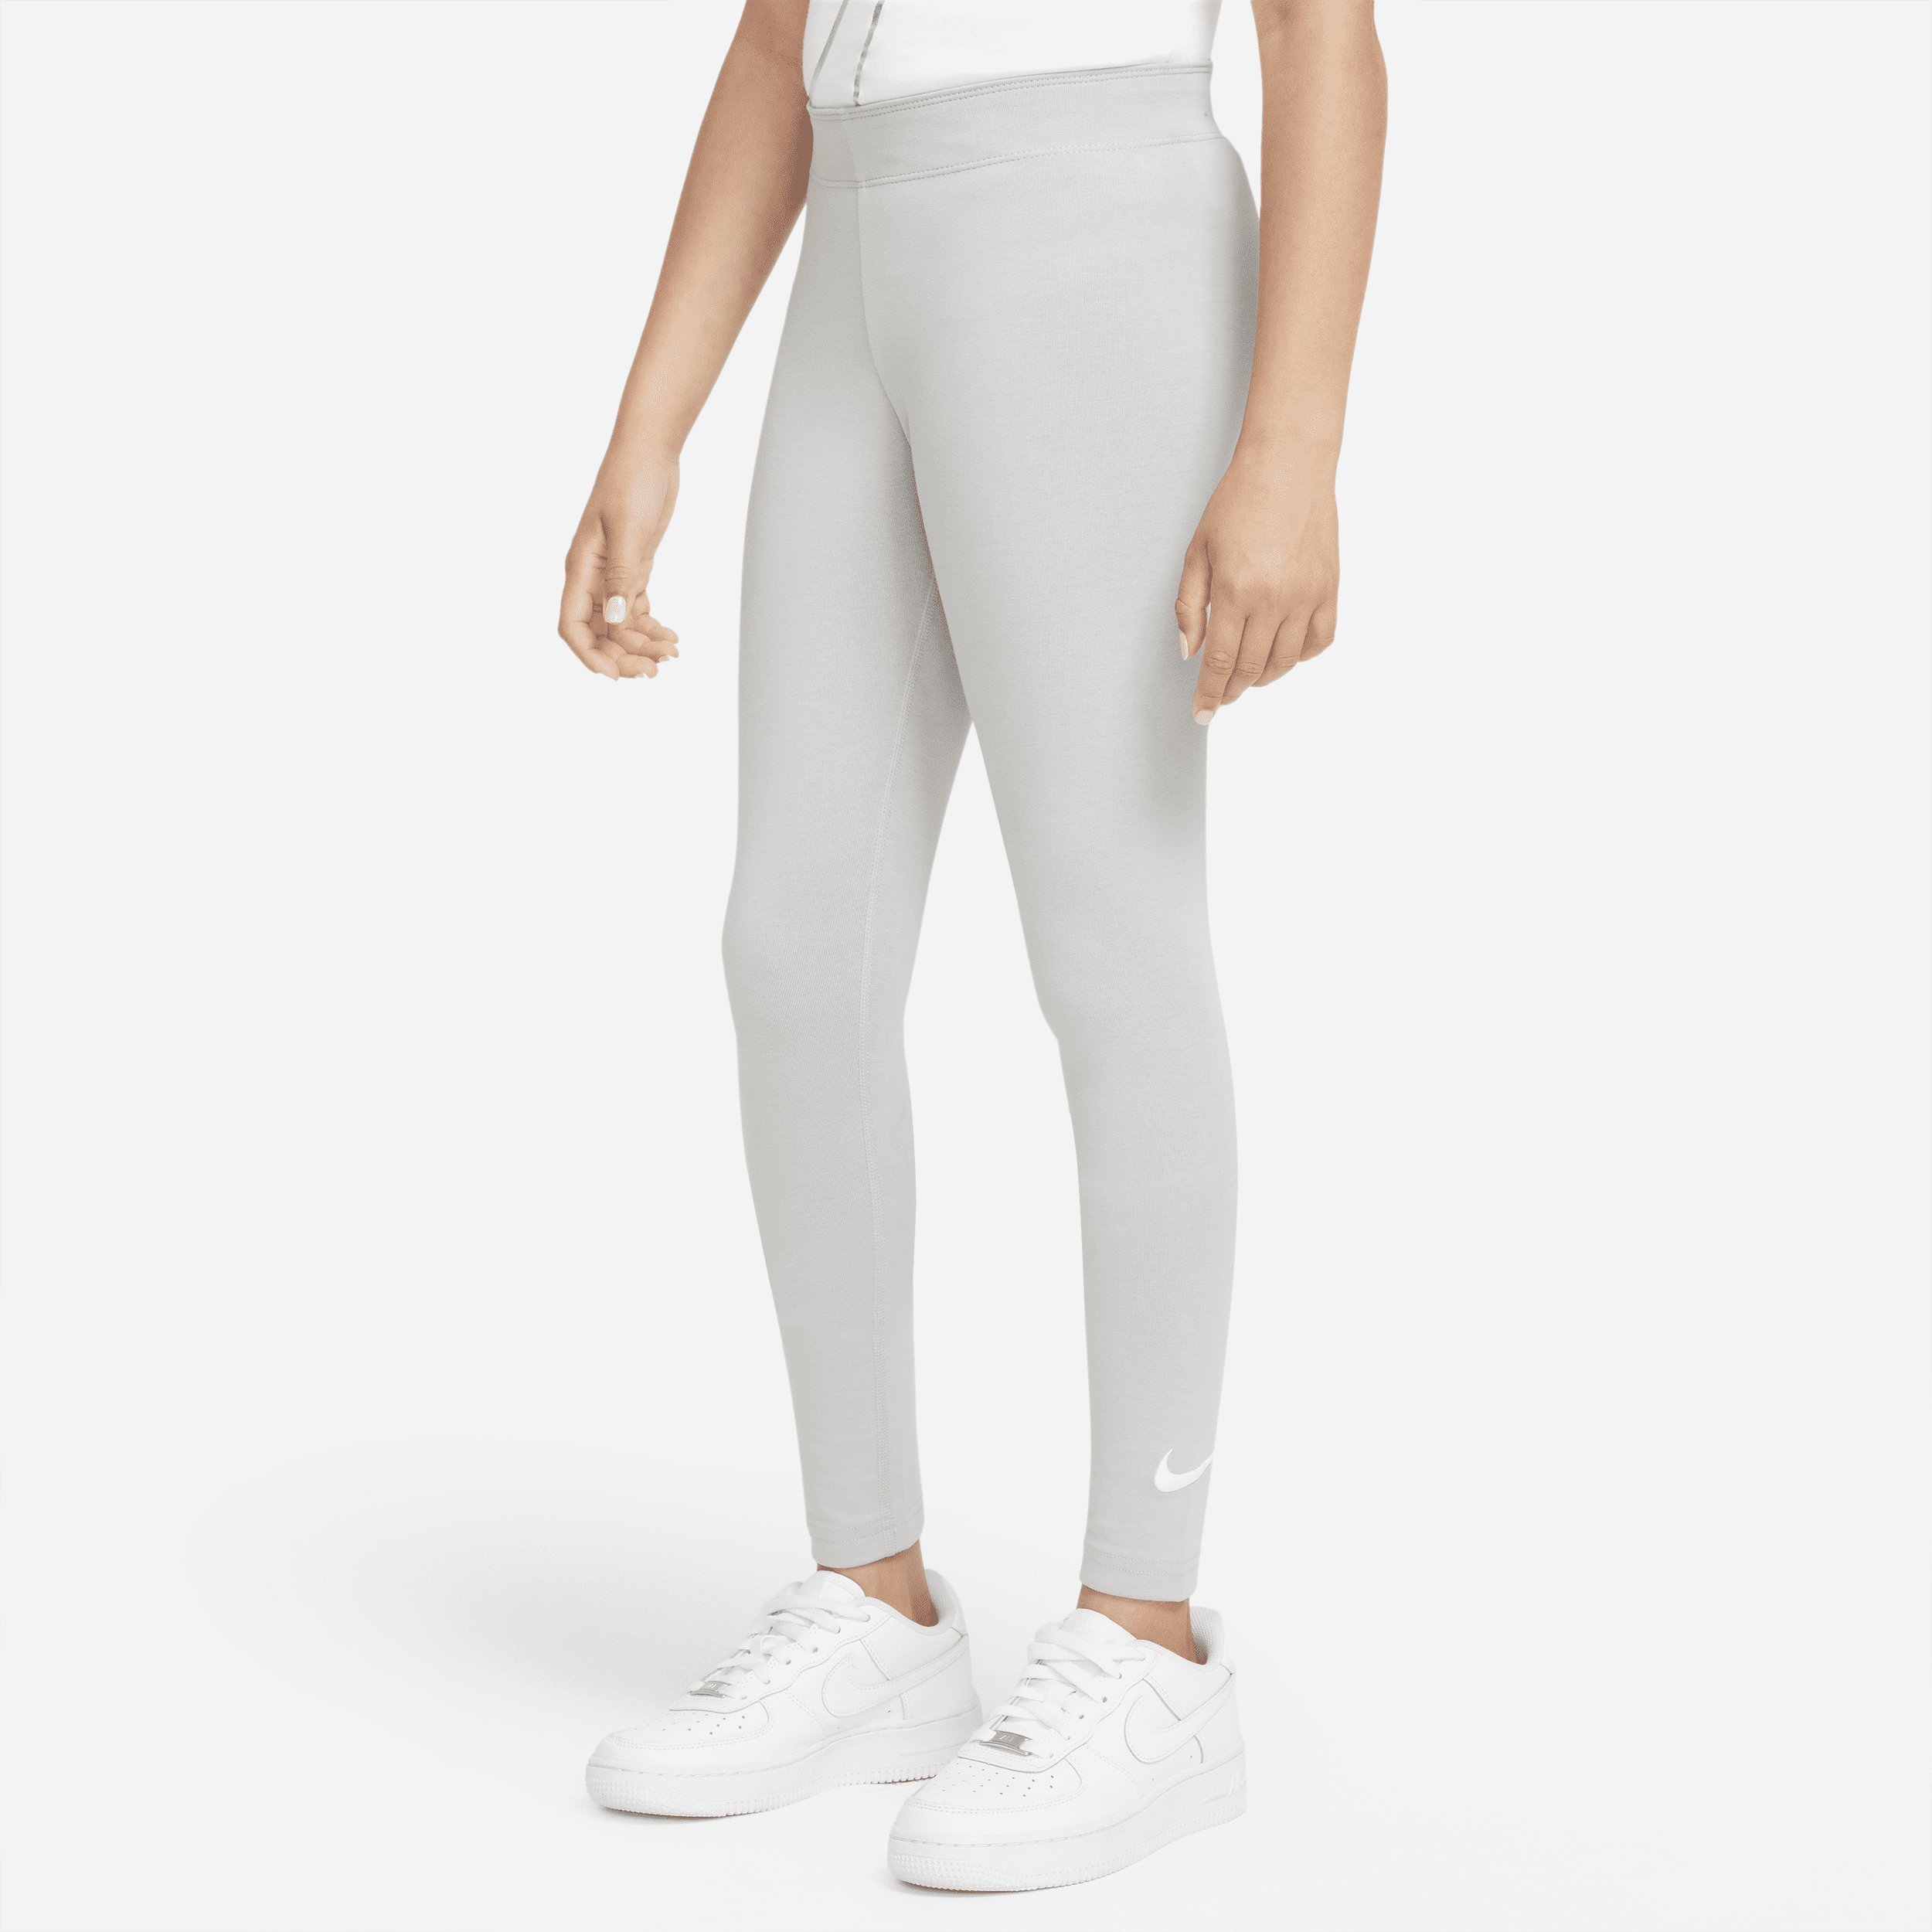 Nike Sportswear Favorites Leggings con logotipo Swoosh - Niña - Gris